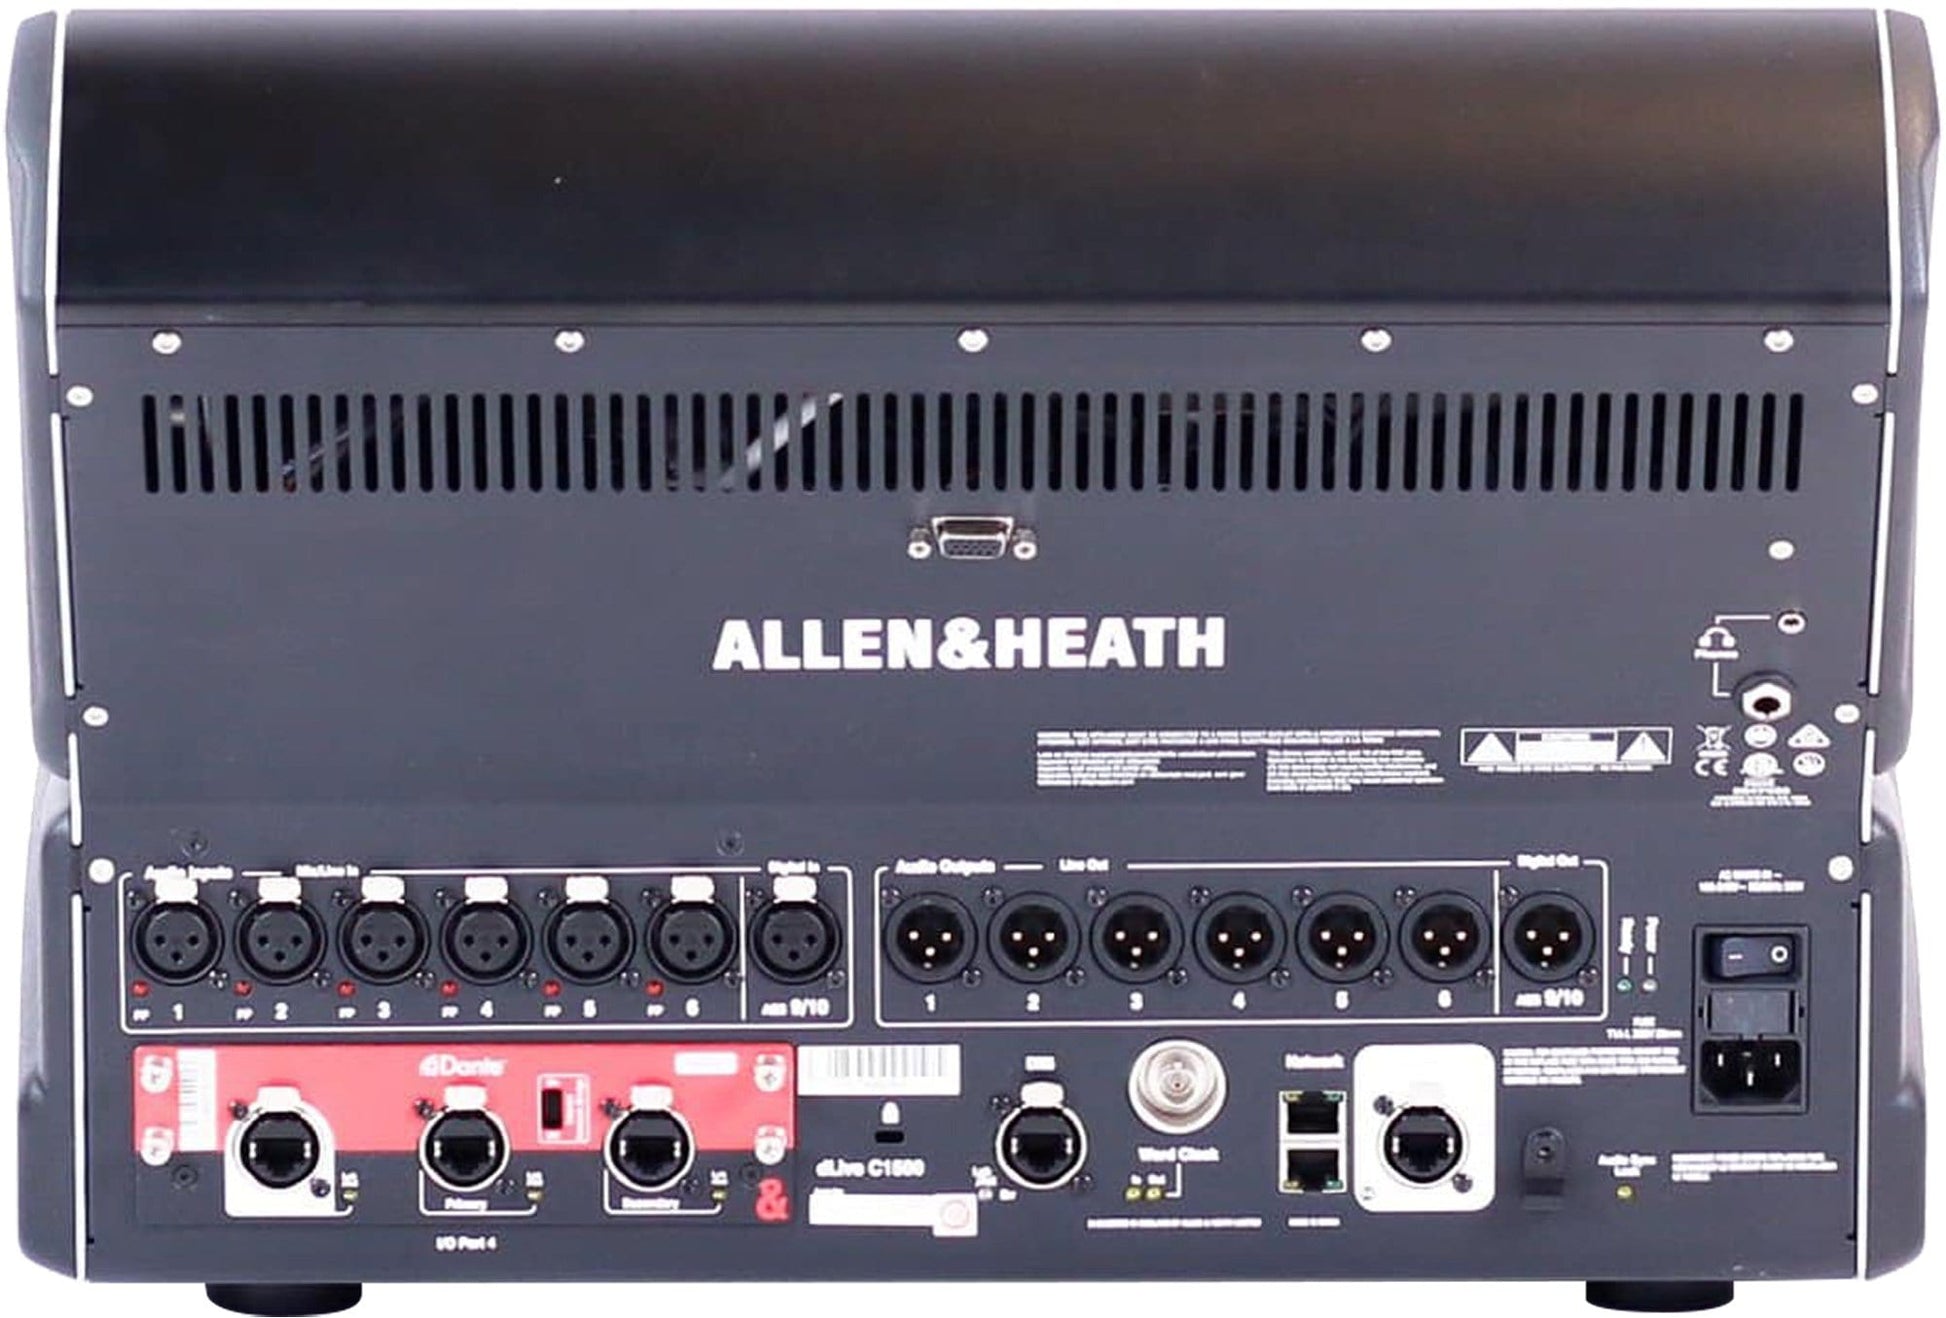 Allen & Heath dLive C1500 Digital Mixing Console - ProSound and Stage Lighting